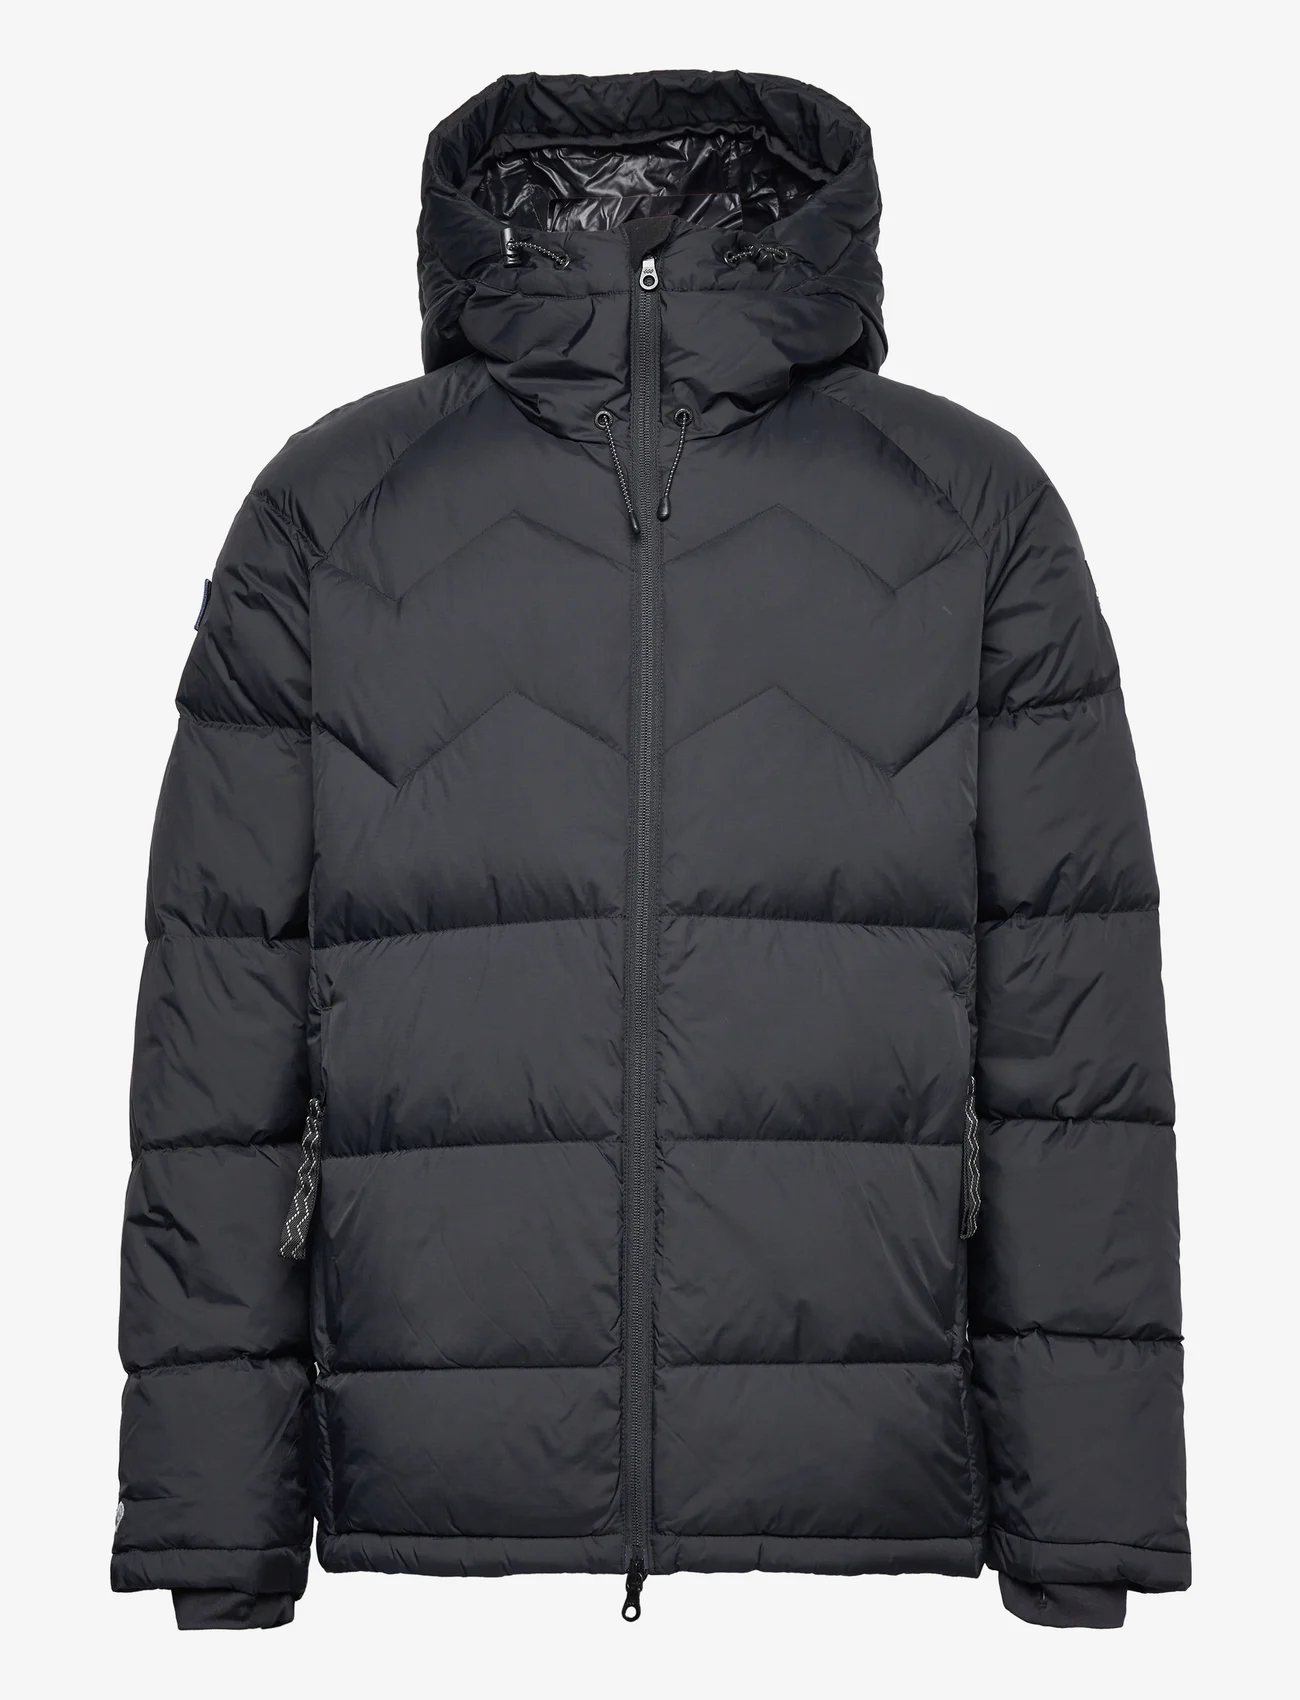 Mountain Works - USX SURVEYOR DOWN PARKA - winter jackets - black - 0